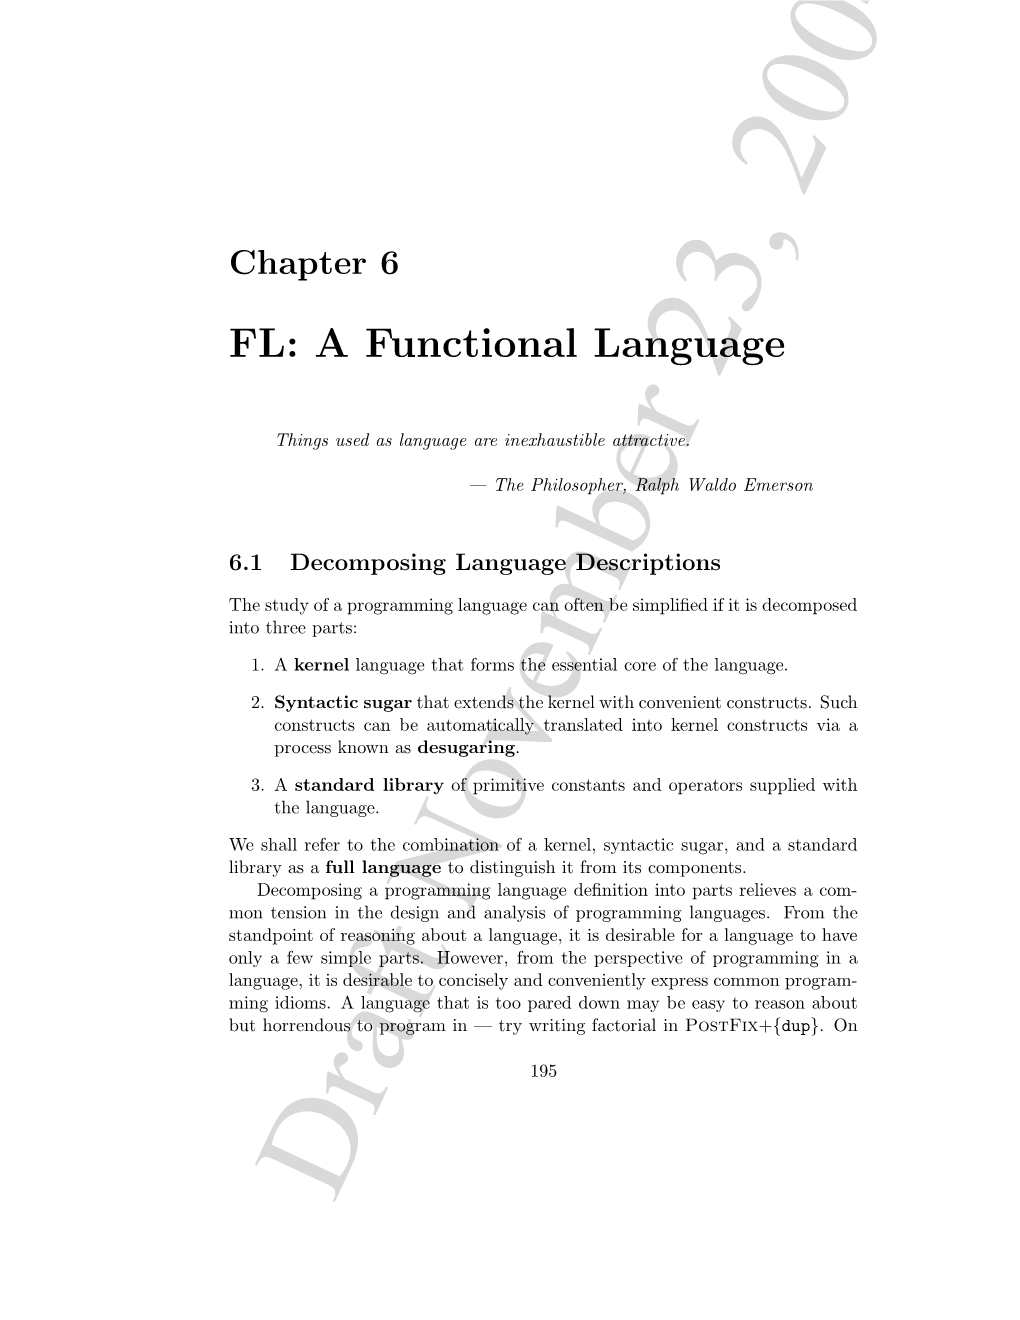 FL: a Functional Language